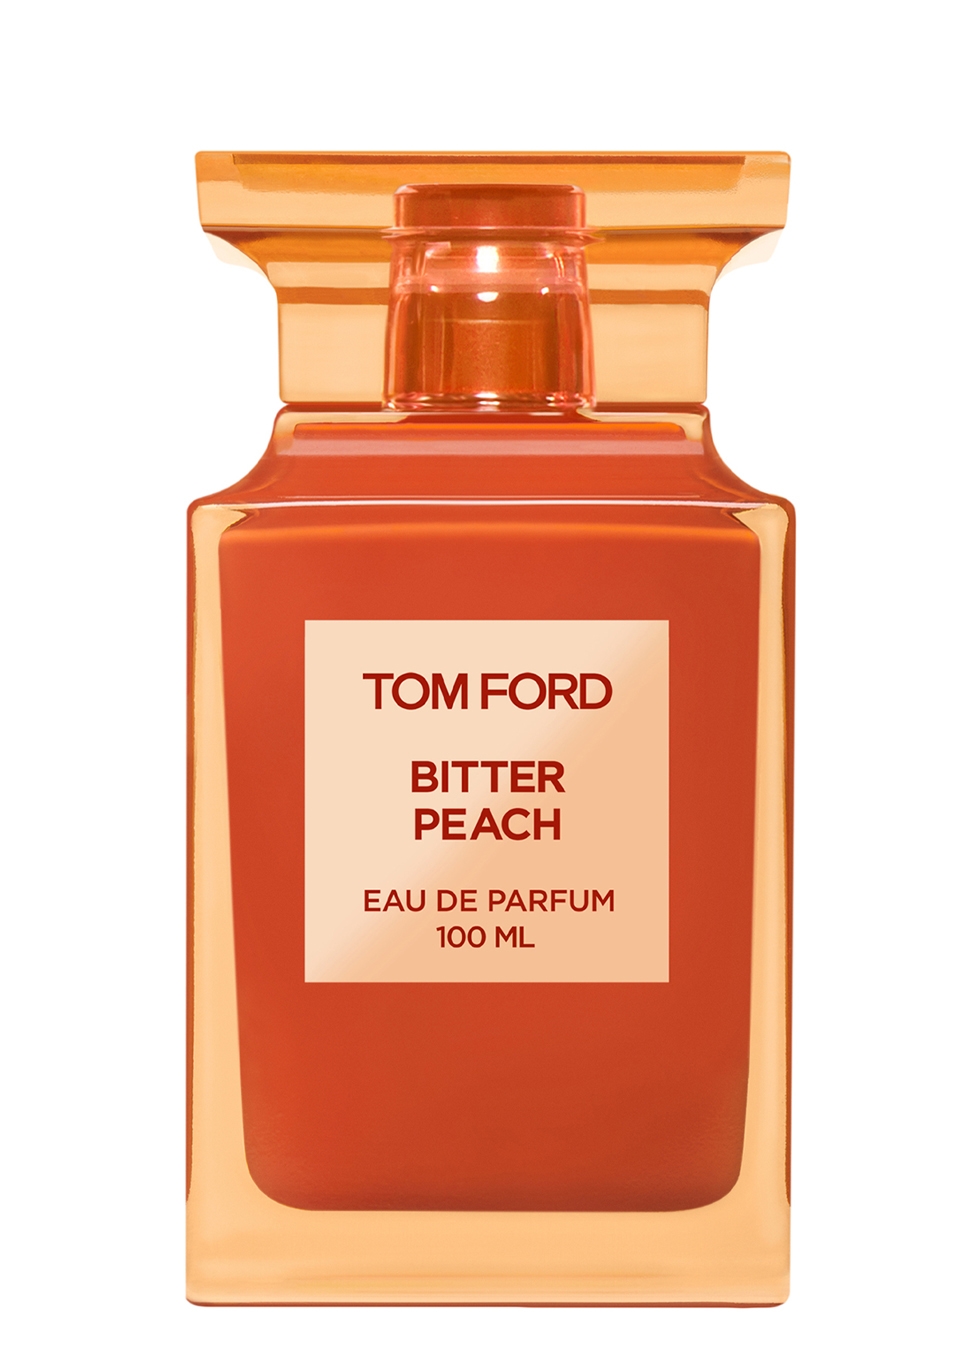 Tom Ford Bitter Peach 100ml - Harvey Nichols